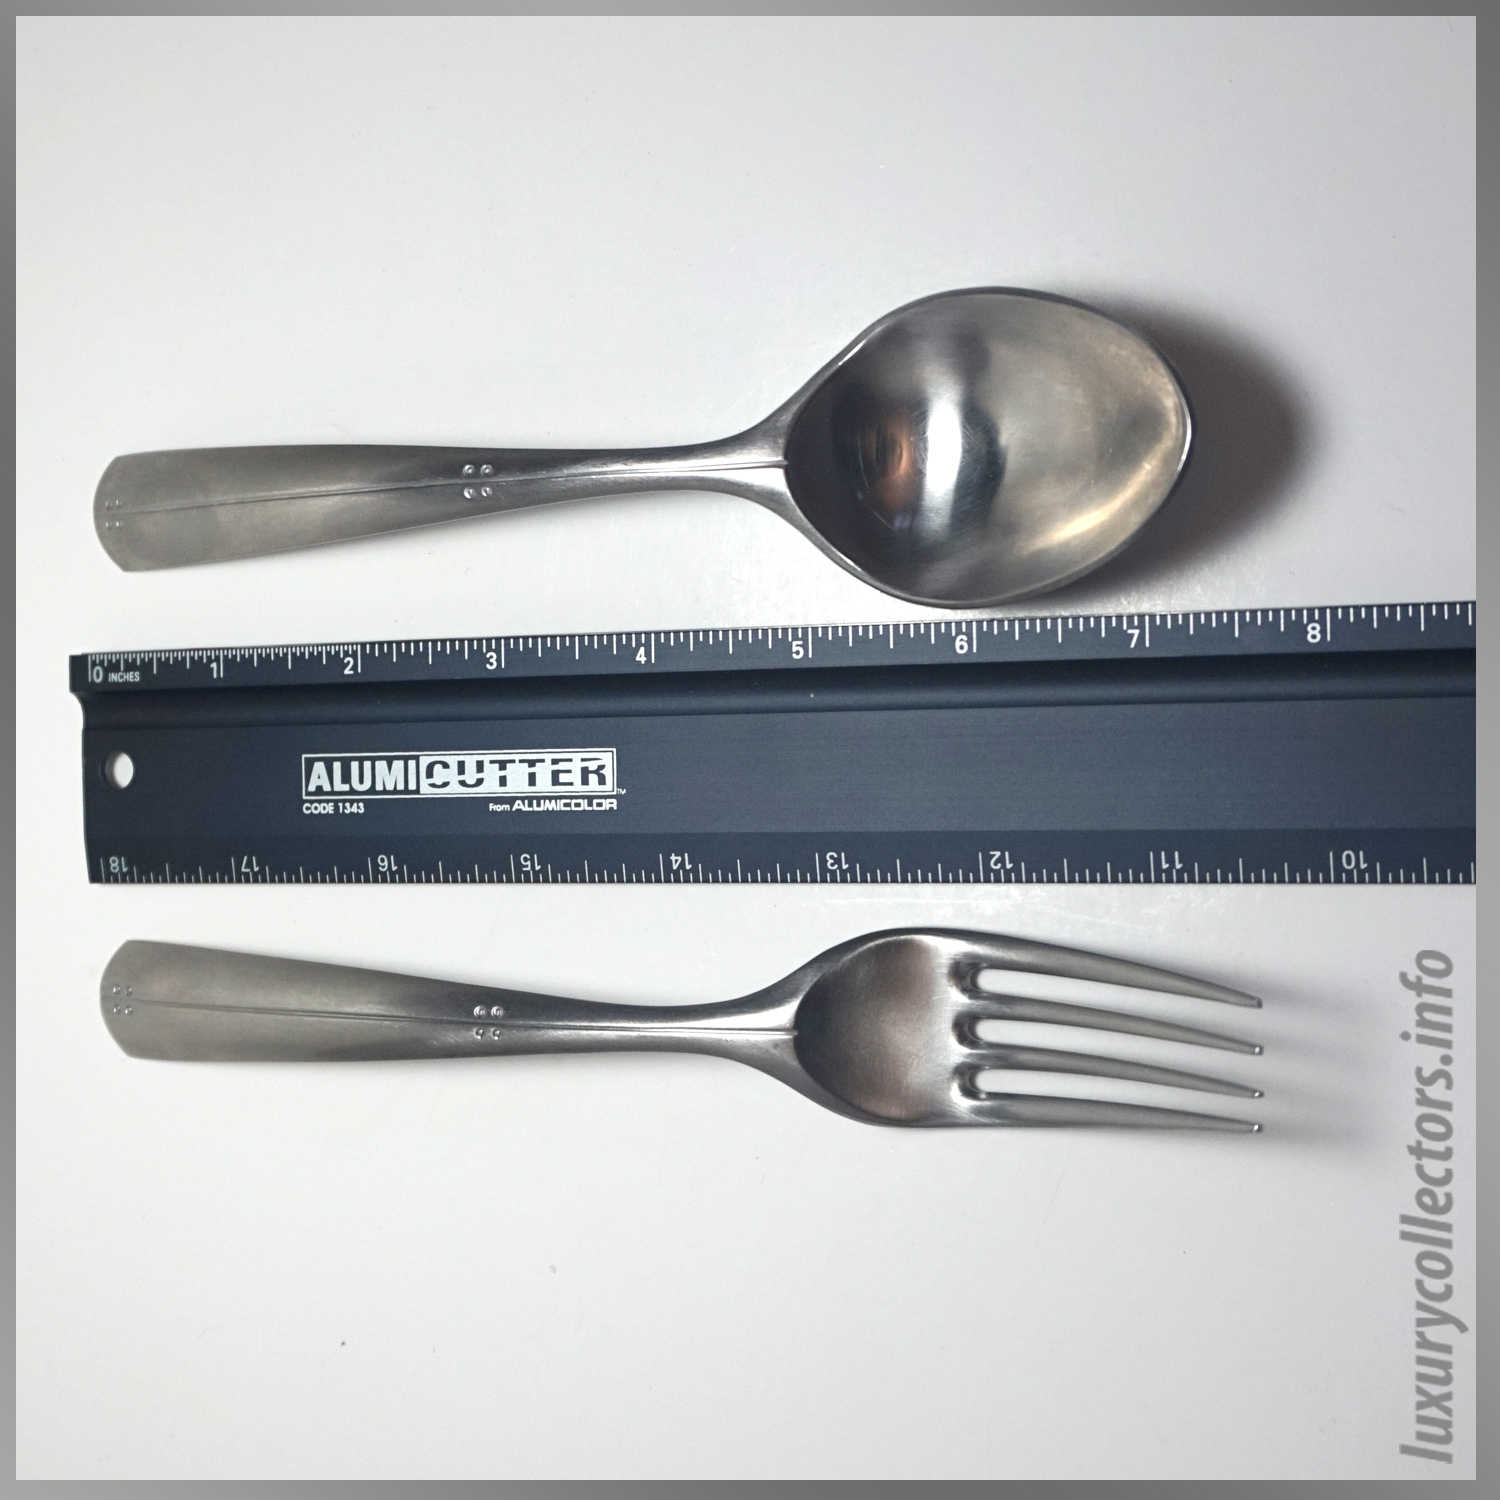 Streamerica Tiffany & Co. Flatware Place Setting Cutlery Stainless Steel Fork Knife Spoon Tableware Measurements 2000